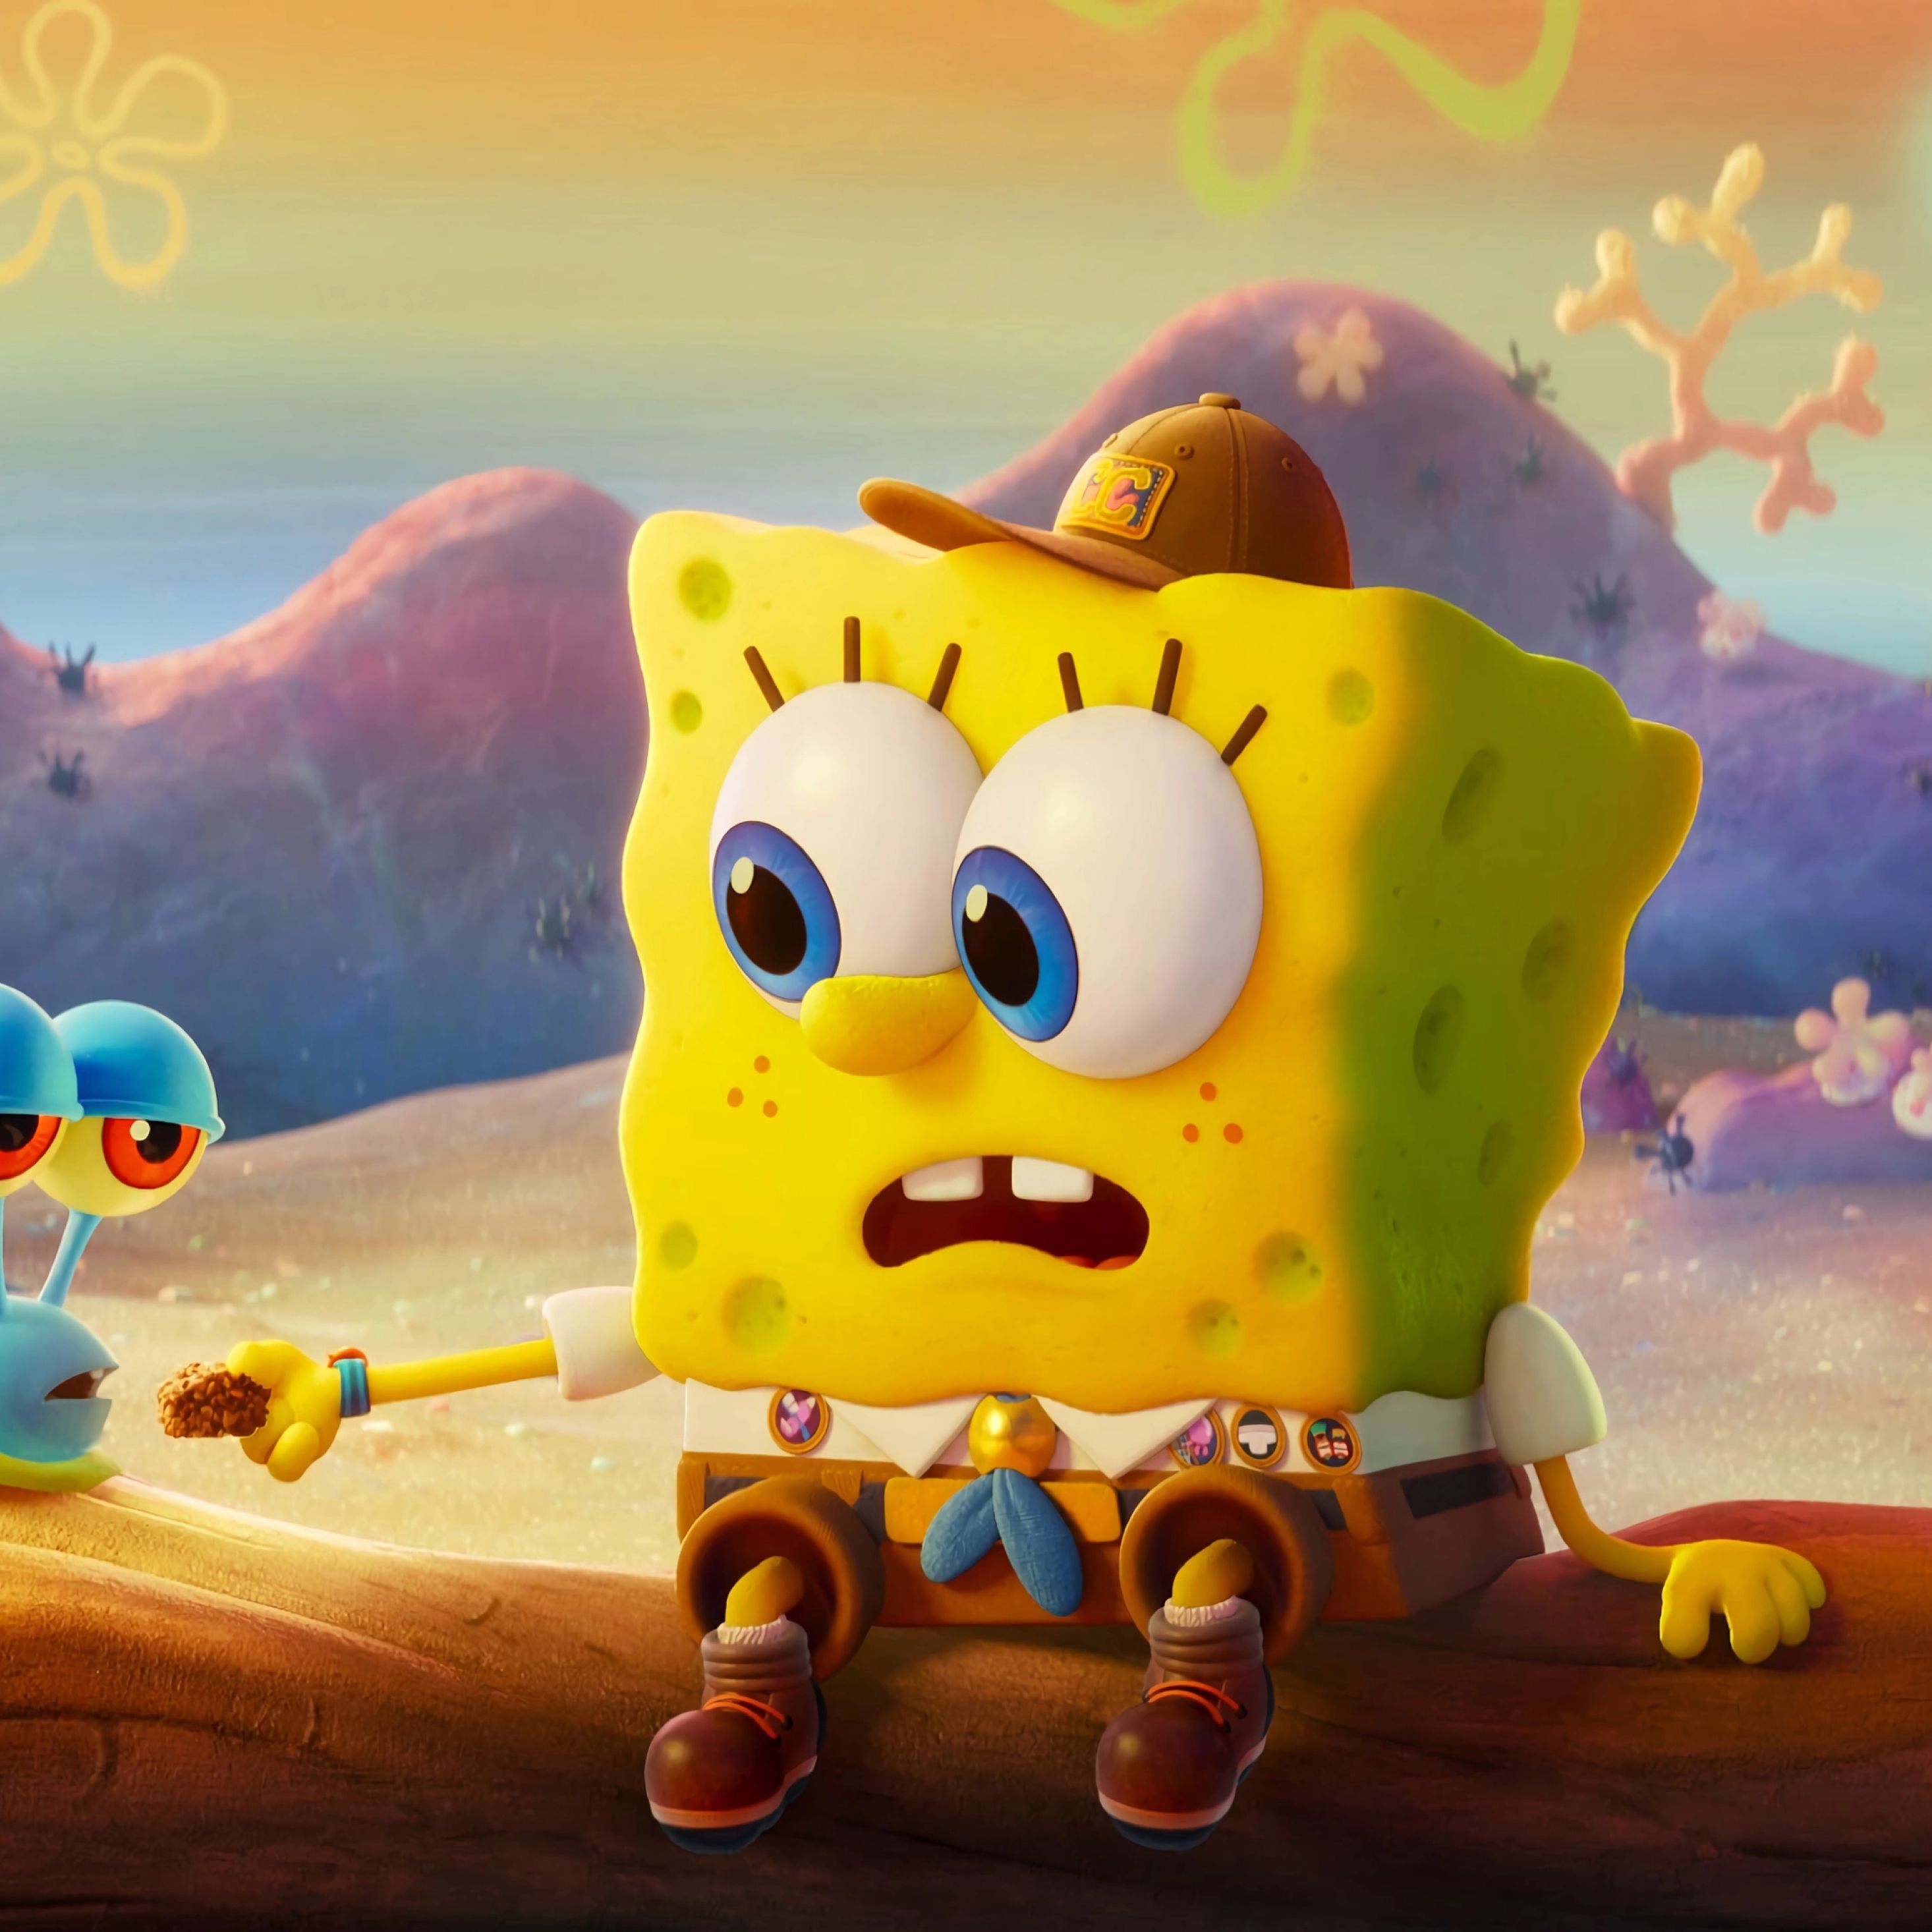 Gambar Keren Spongebob Hd gambar ke 4